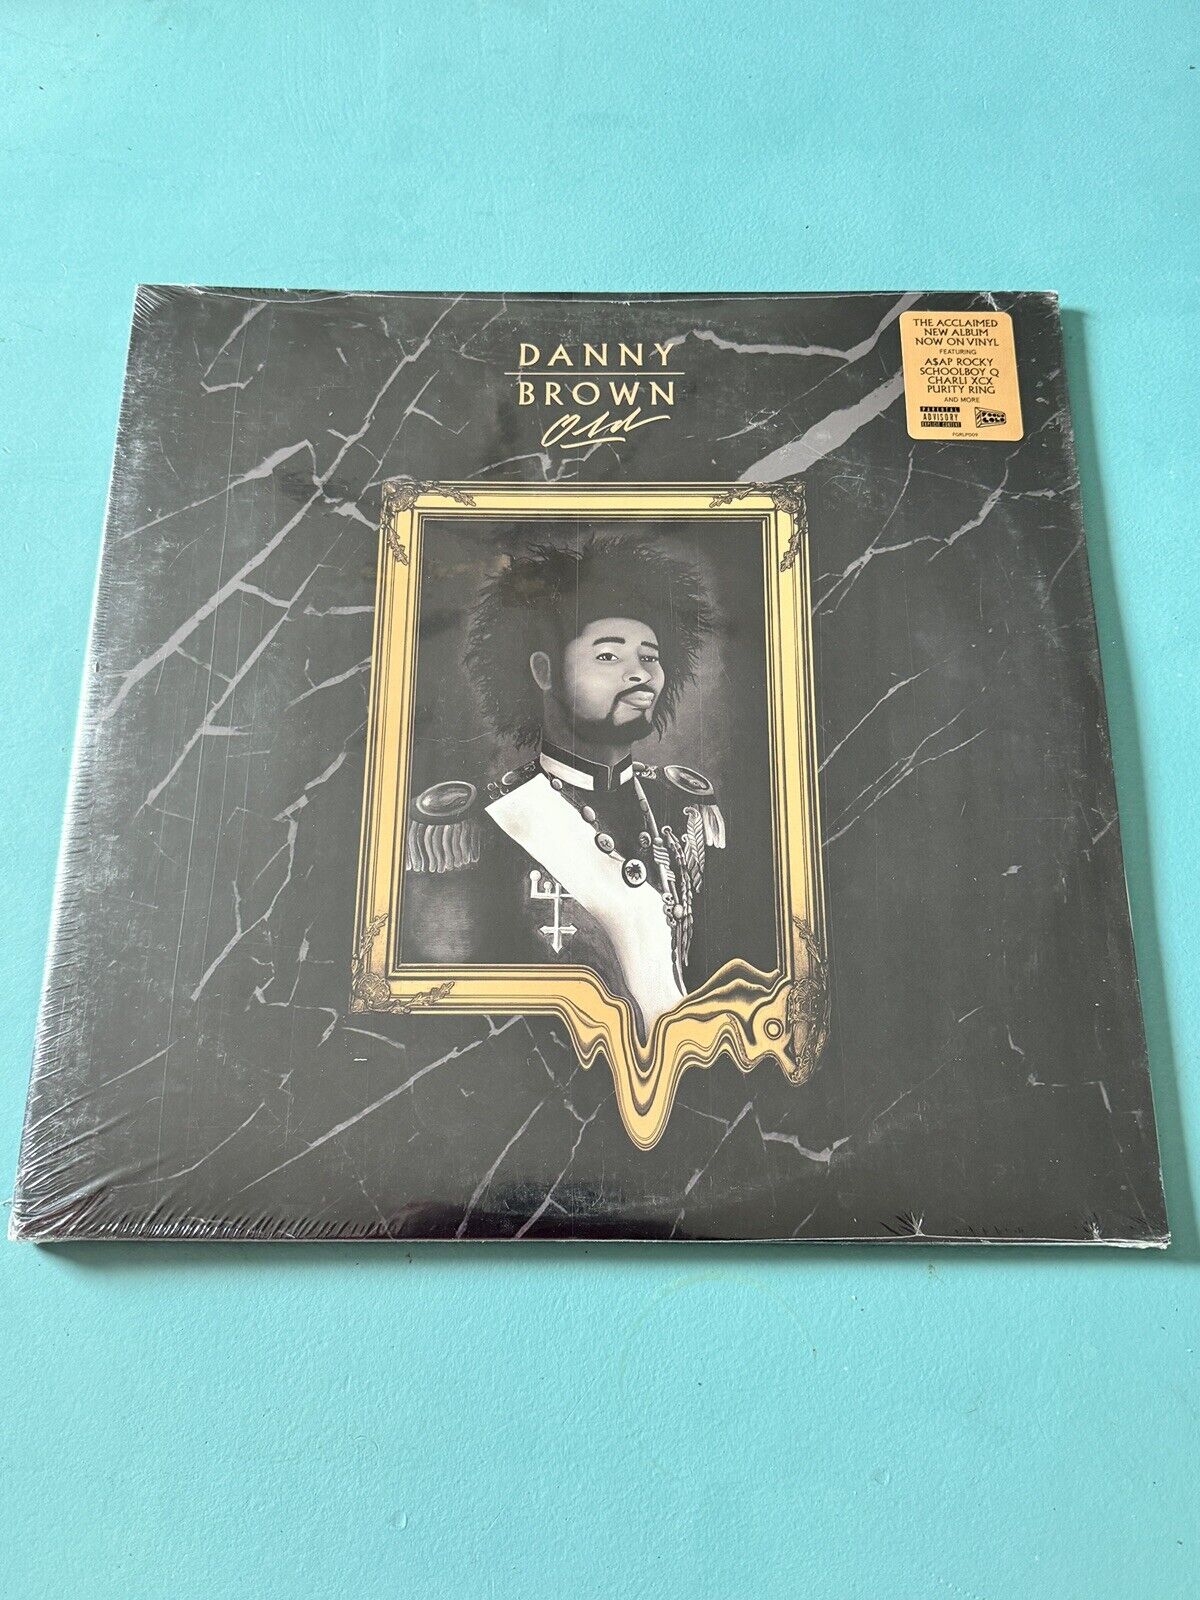 Danny Brown Old 2x LP Vinyl SEALED Super Rare See Description